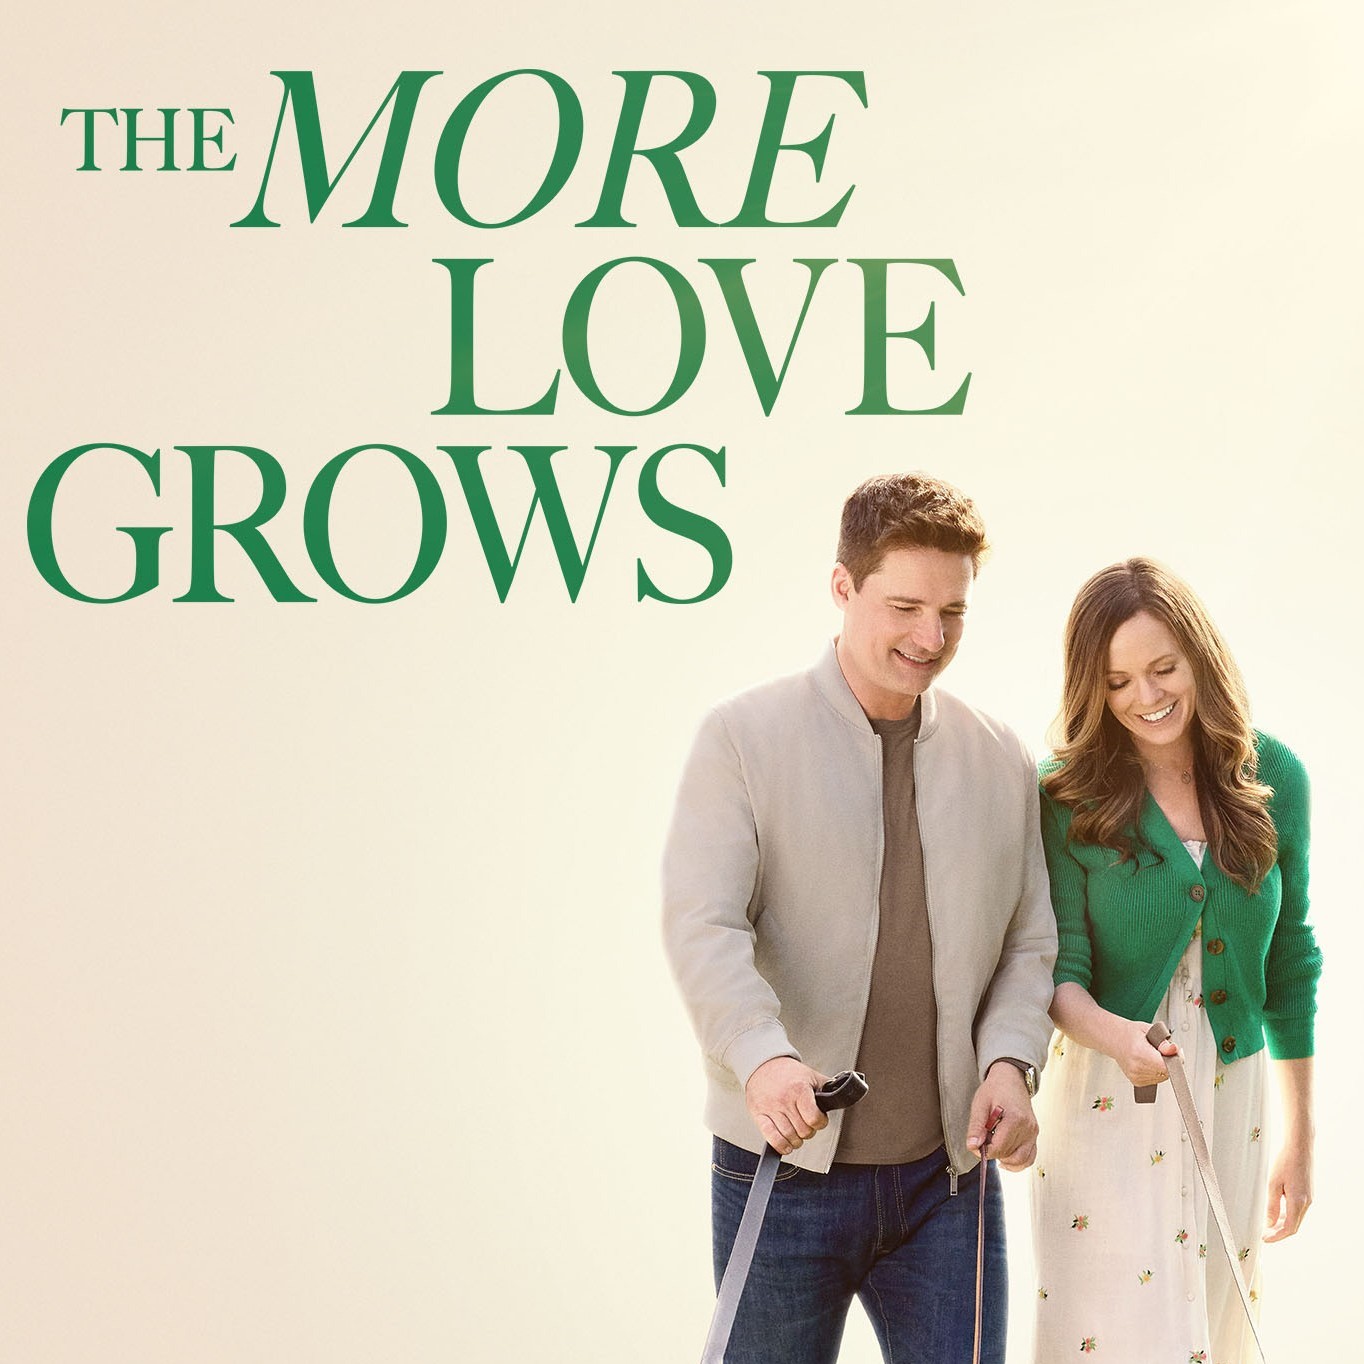 The More Love Grows (c) Hallmark